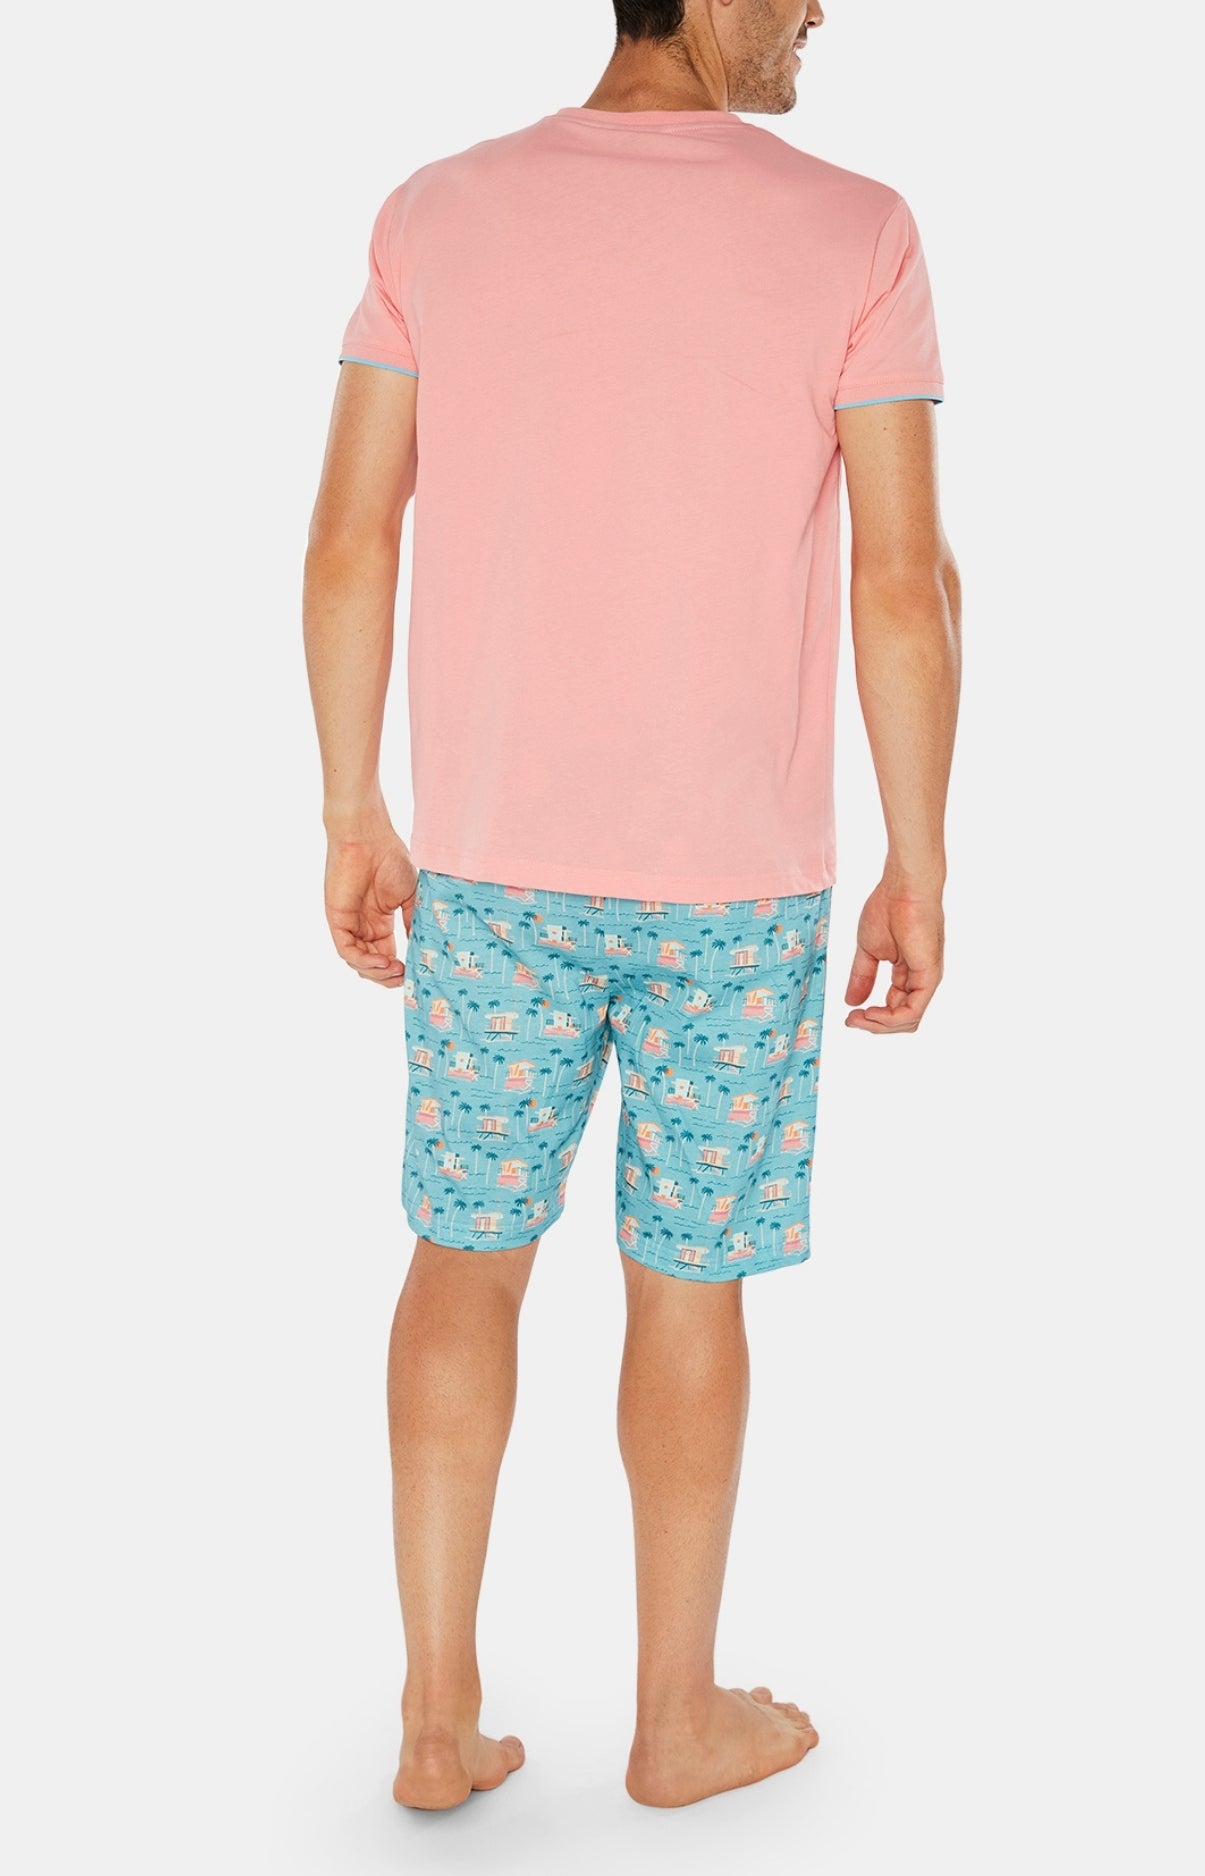 Coolifornia Pajama Shorts